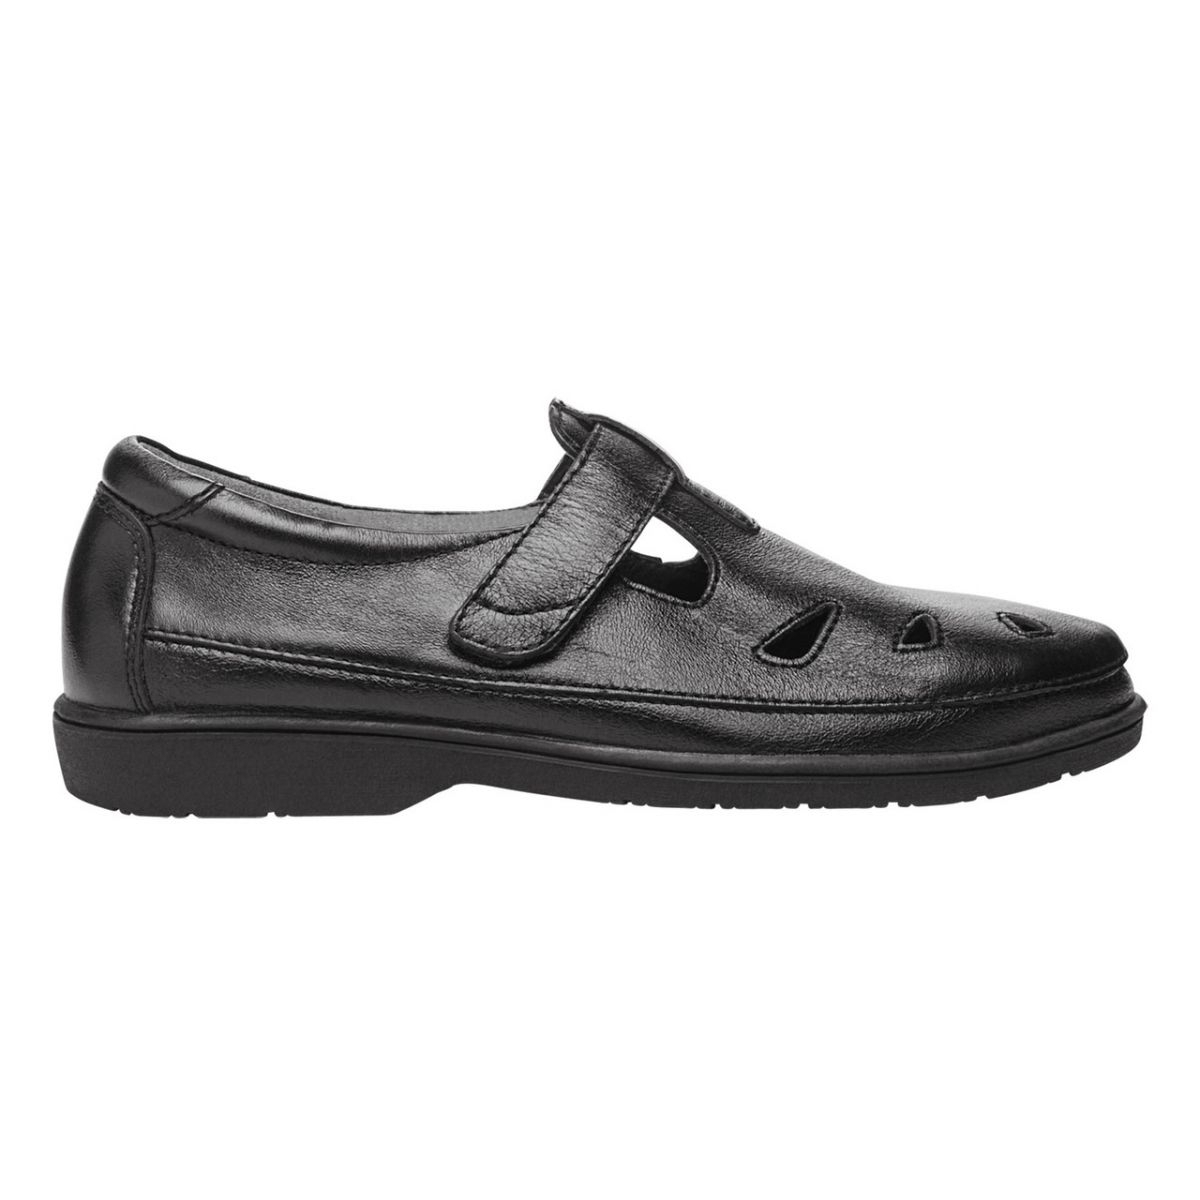 Propet Women's Ladybug T-Strap Shoe Black - W3232B BLACK - BLACK, 6.5 D US